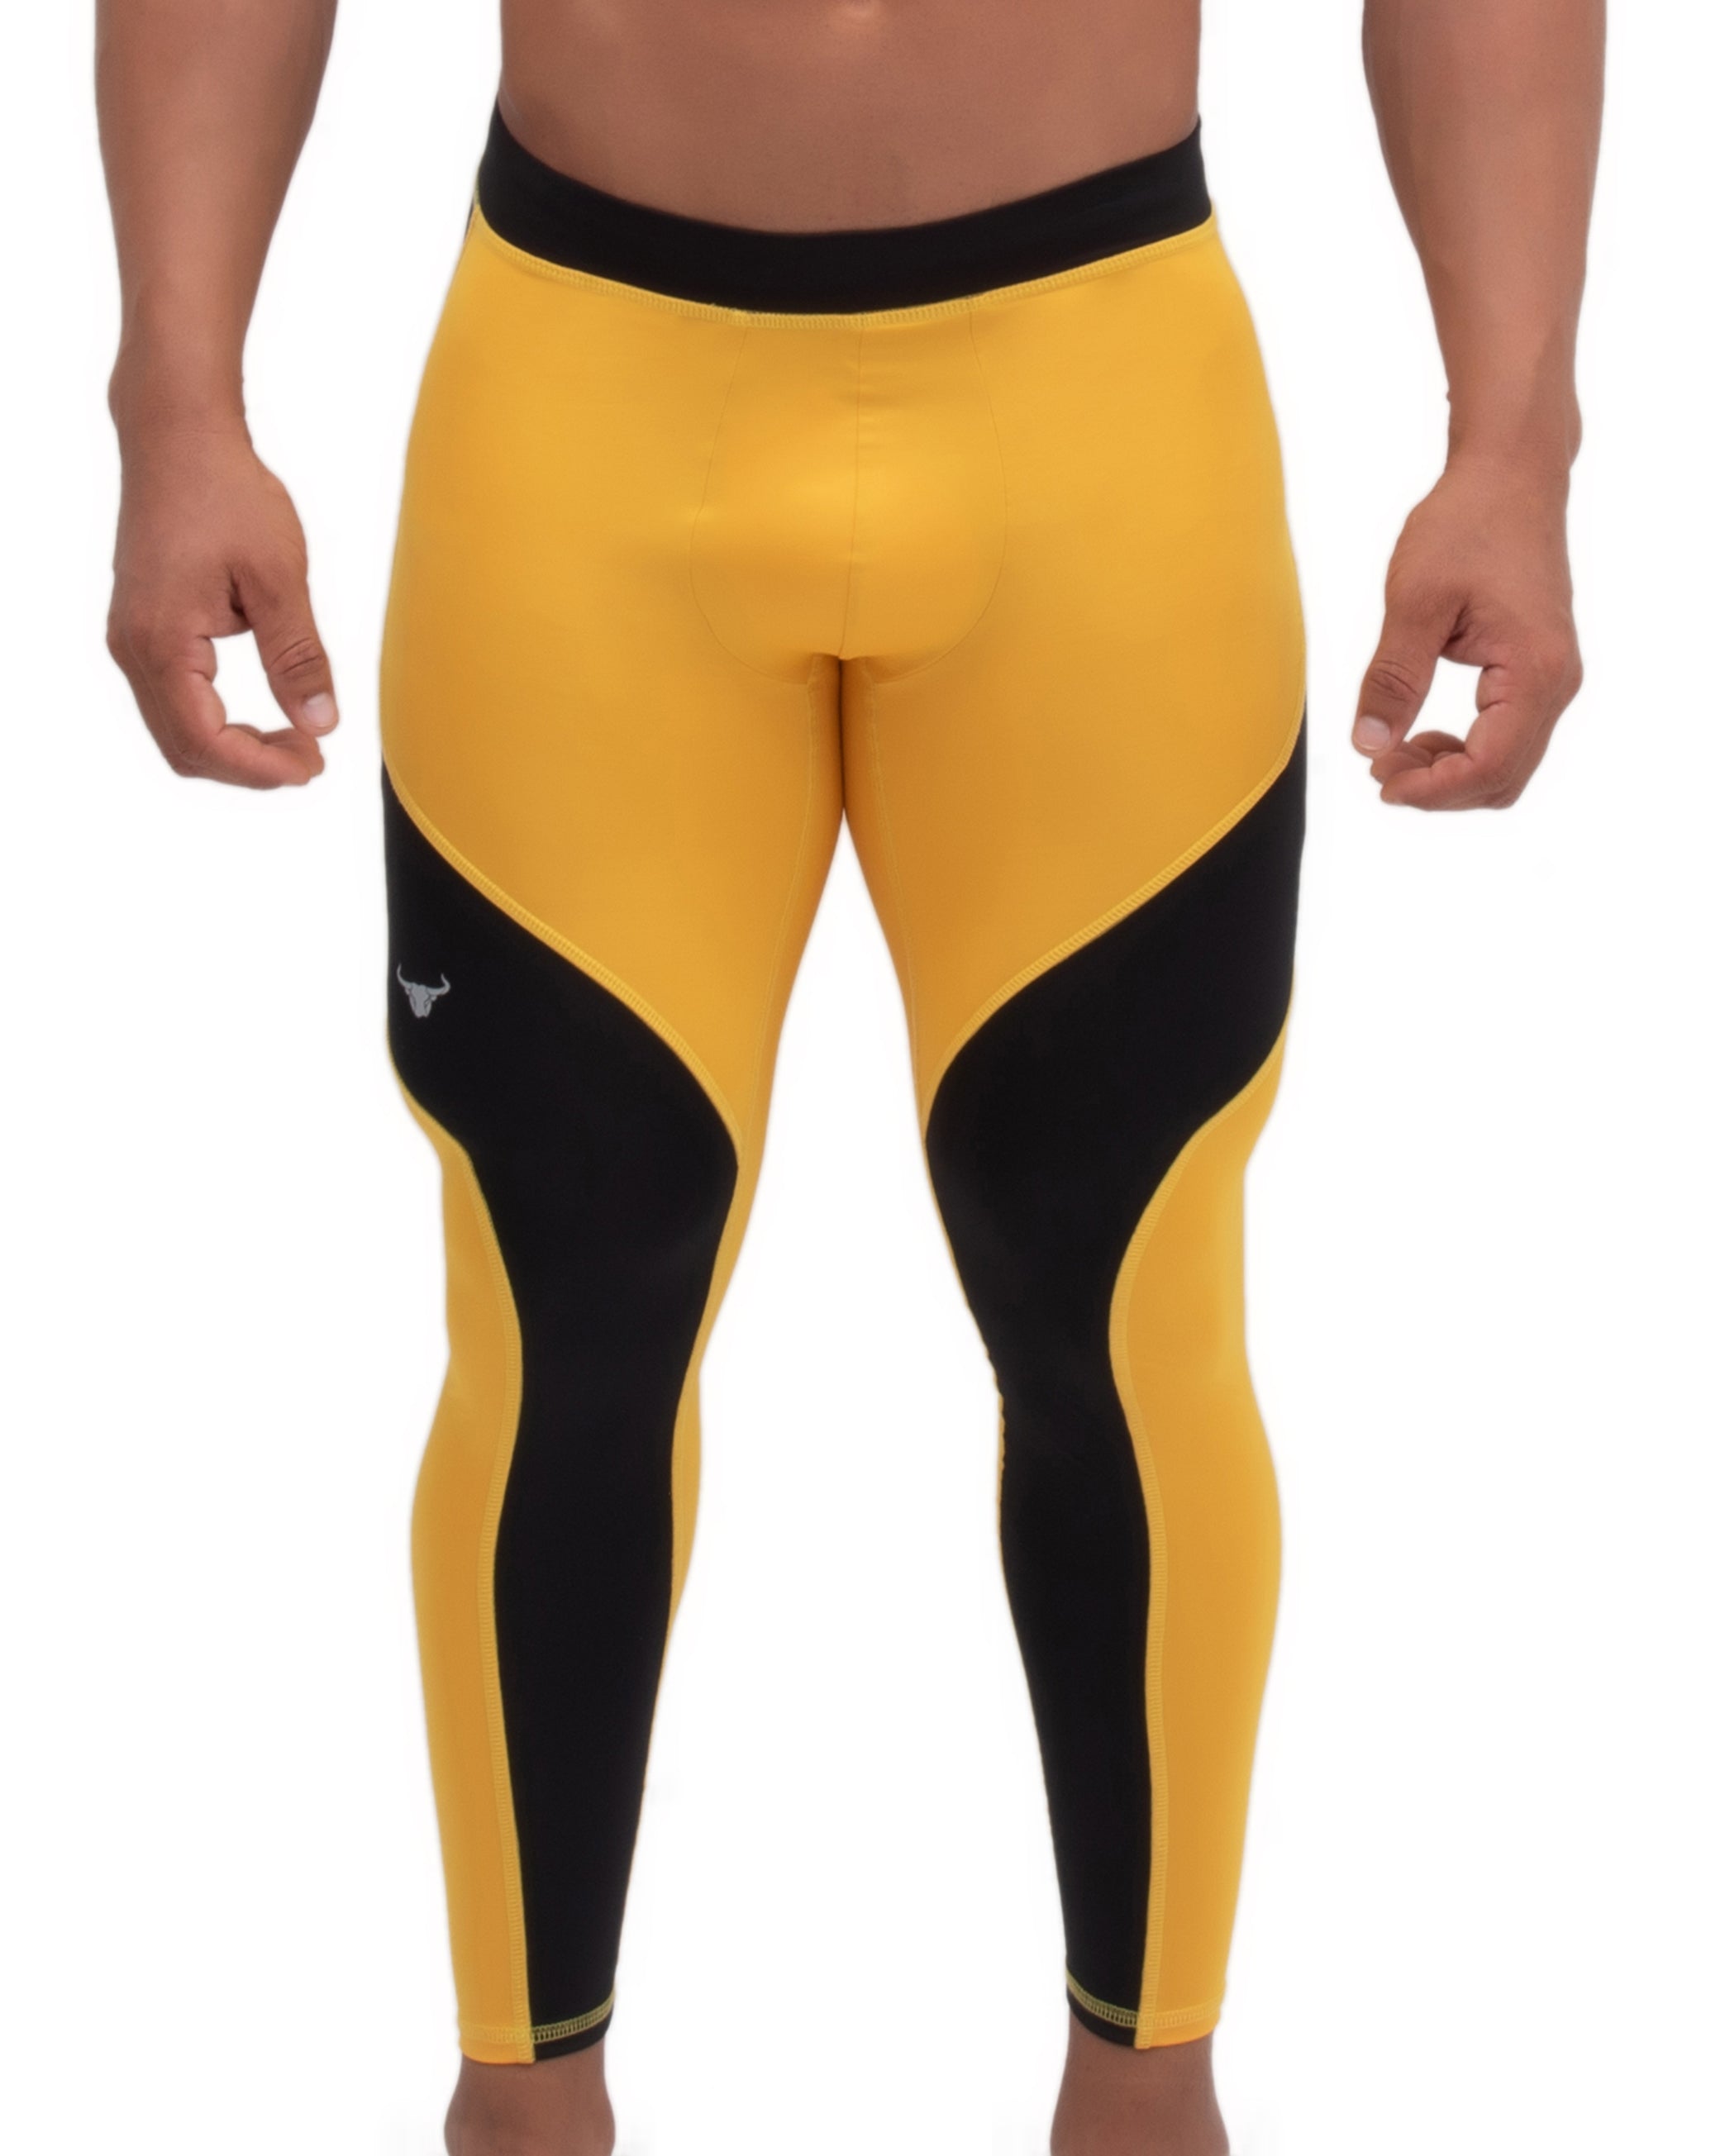 Men's Skinfit Black Yellow Spandex Tights Compression Pants Small 32